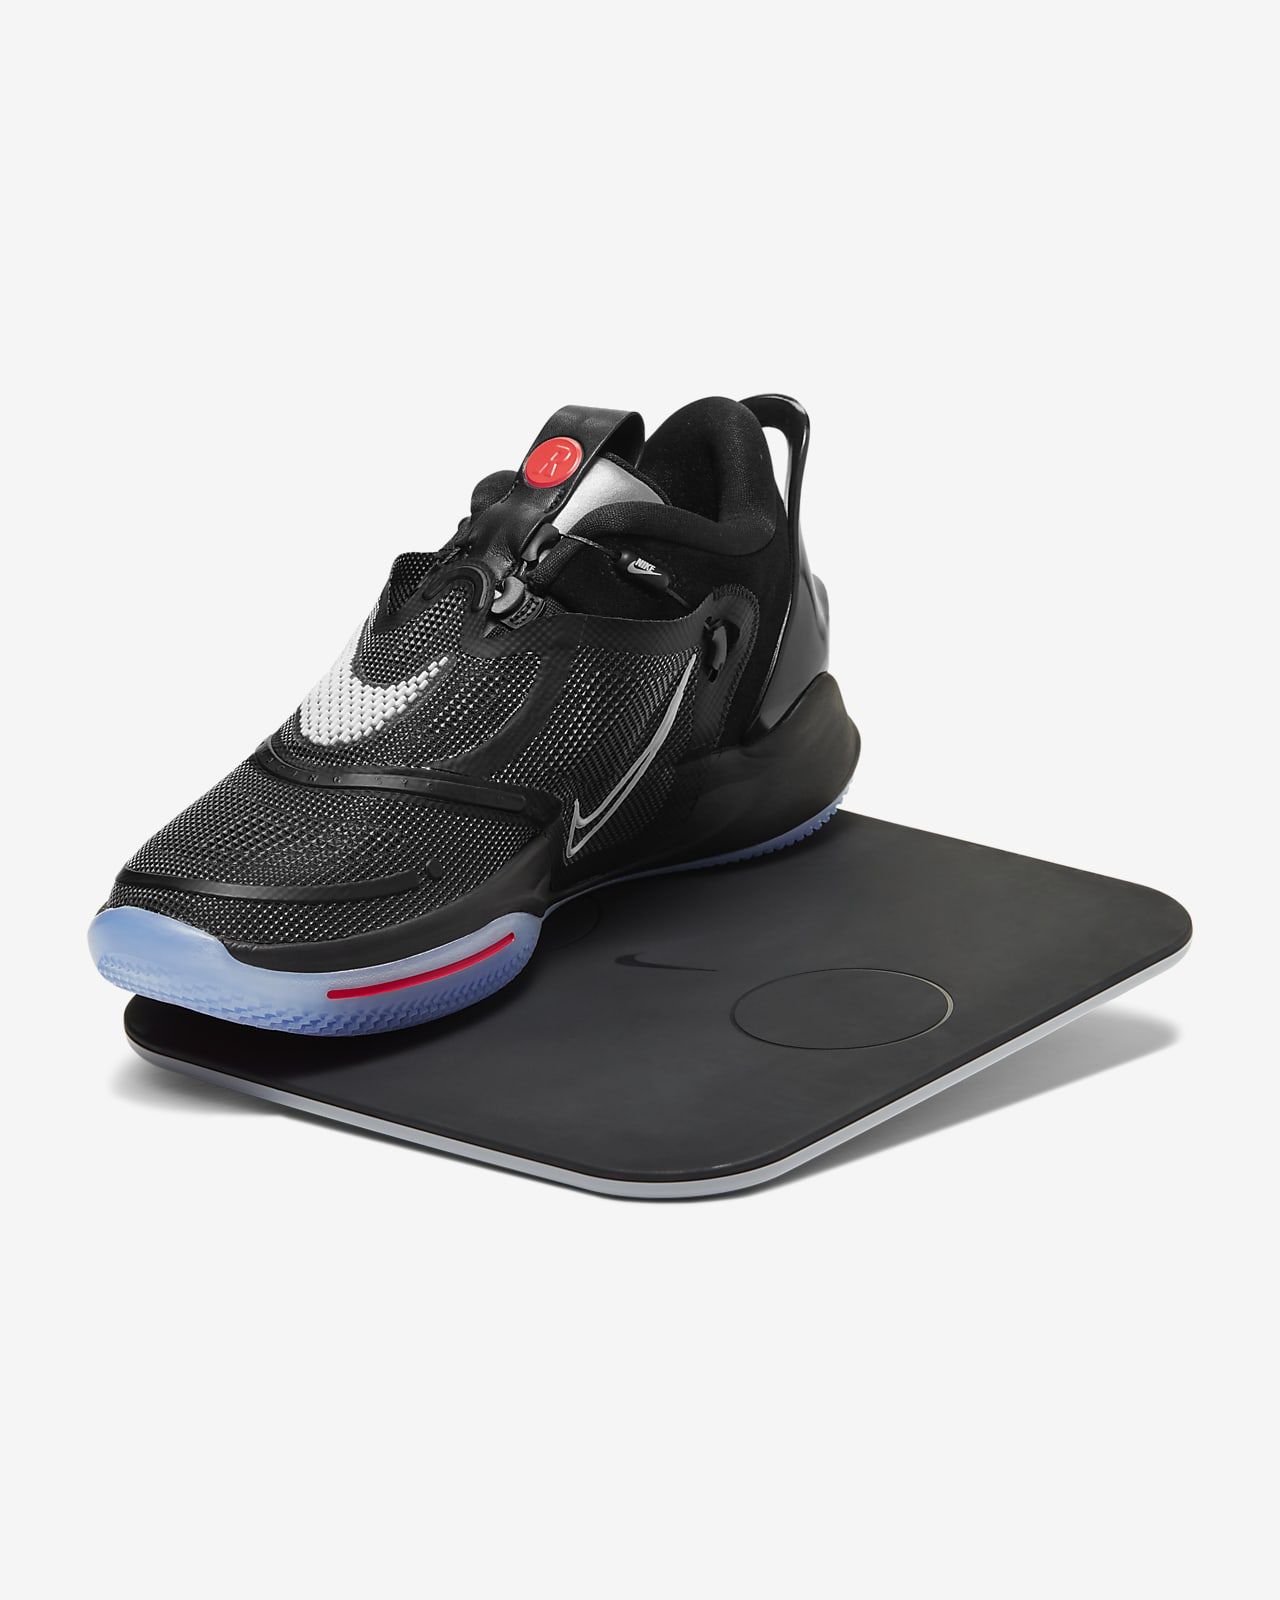 Nike Adapt Bb 2 0 Basketball Shoe Nike Com